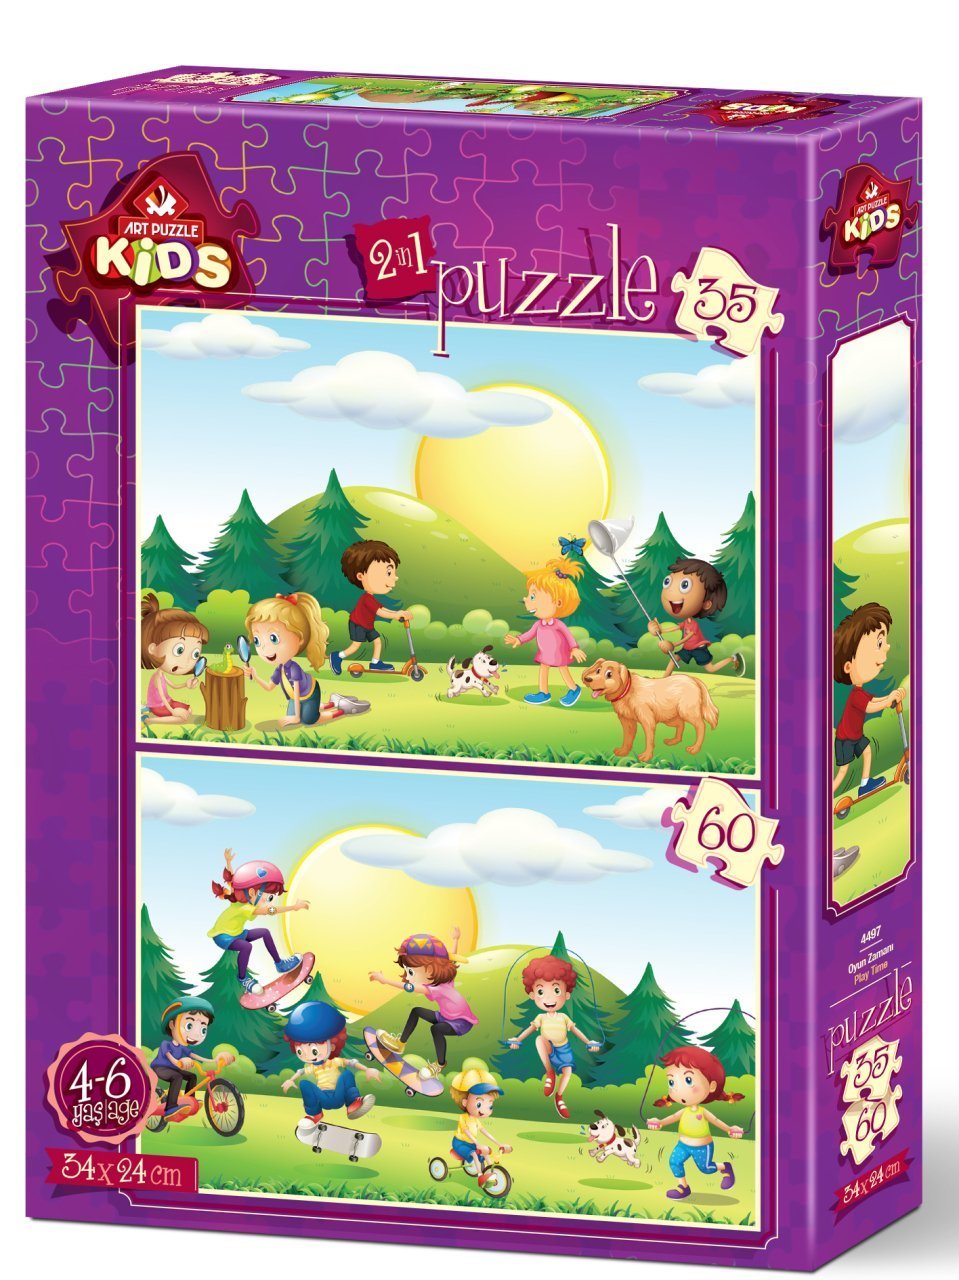 2 Puzzles - Kids